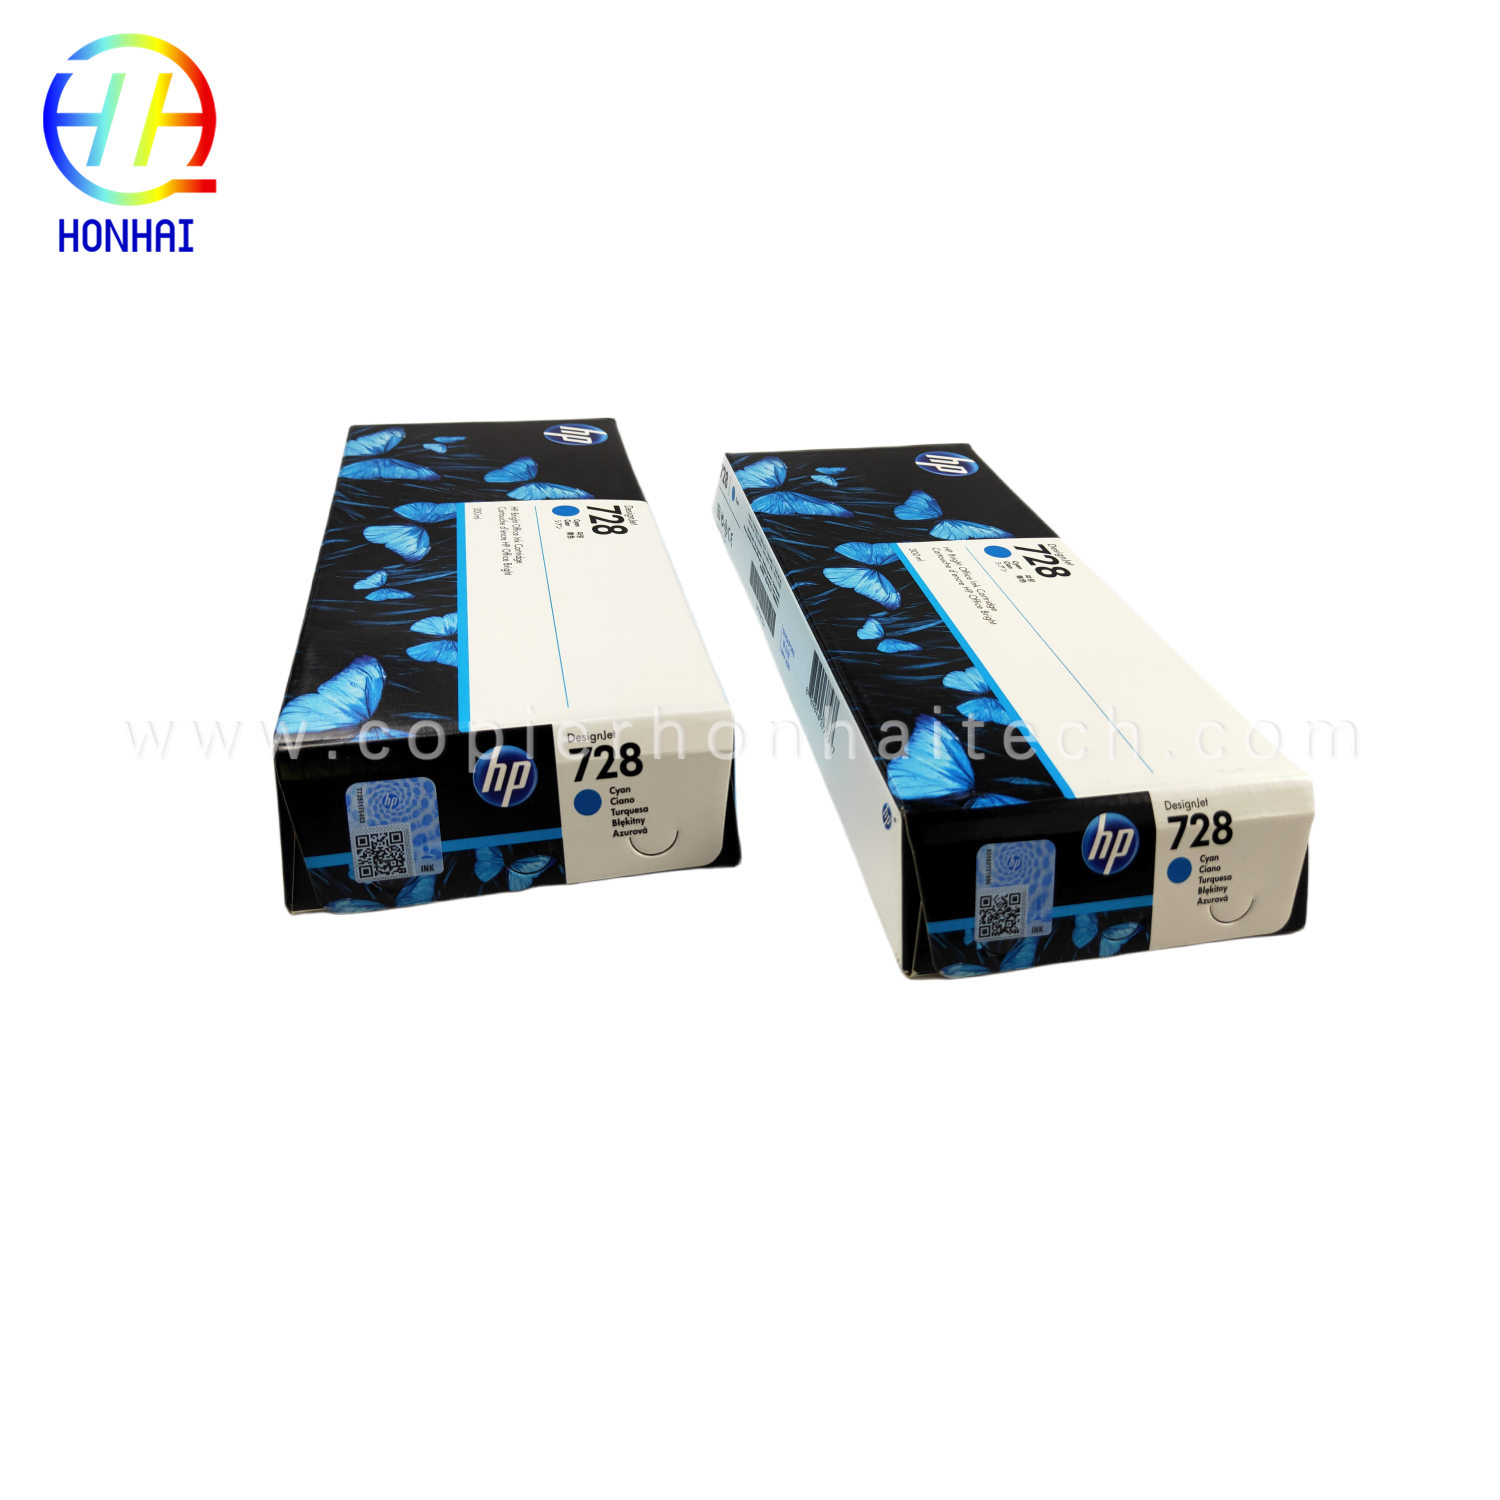 https://www.copierhonhaitech.com/original-new-ink-cartridge-cyan-for-hp-designjet-t730-and-t830-large-format-plotter-printers-and-hp-729-designjet-printhead- 728-f9k17a-product/